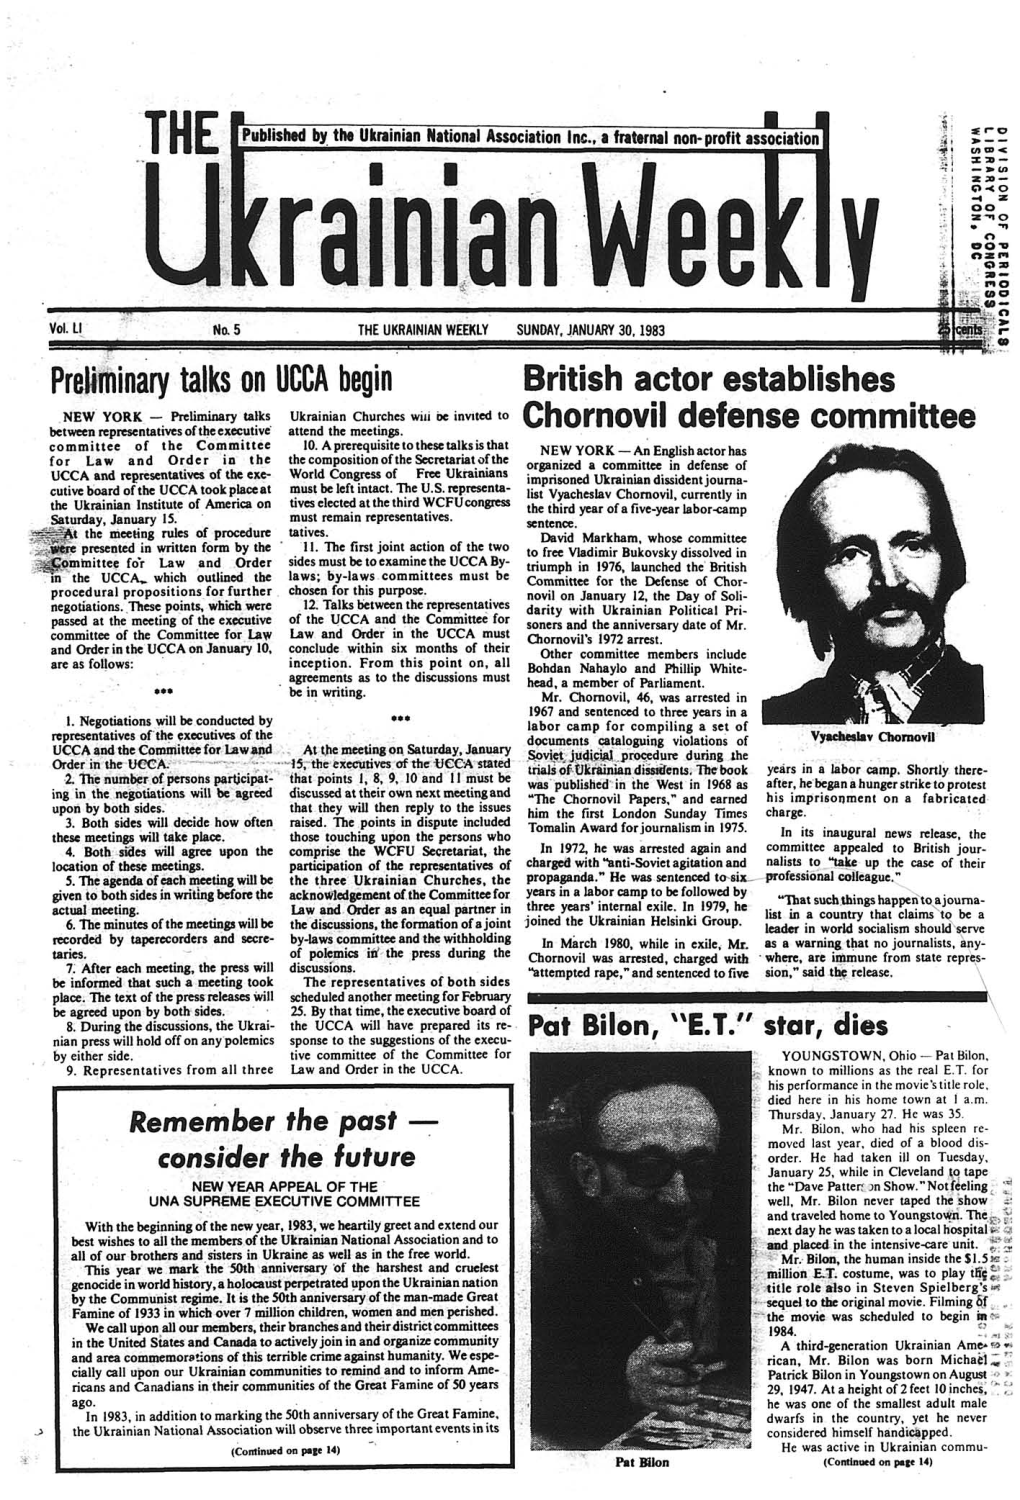 The Ukrainian Weekly 1983, No.5